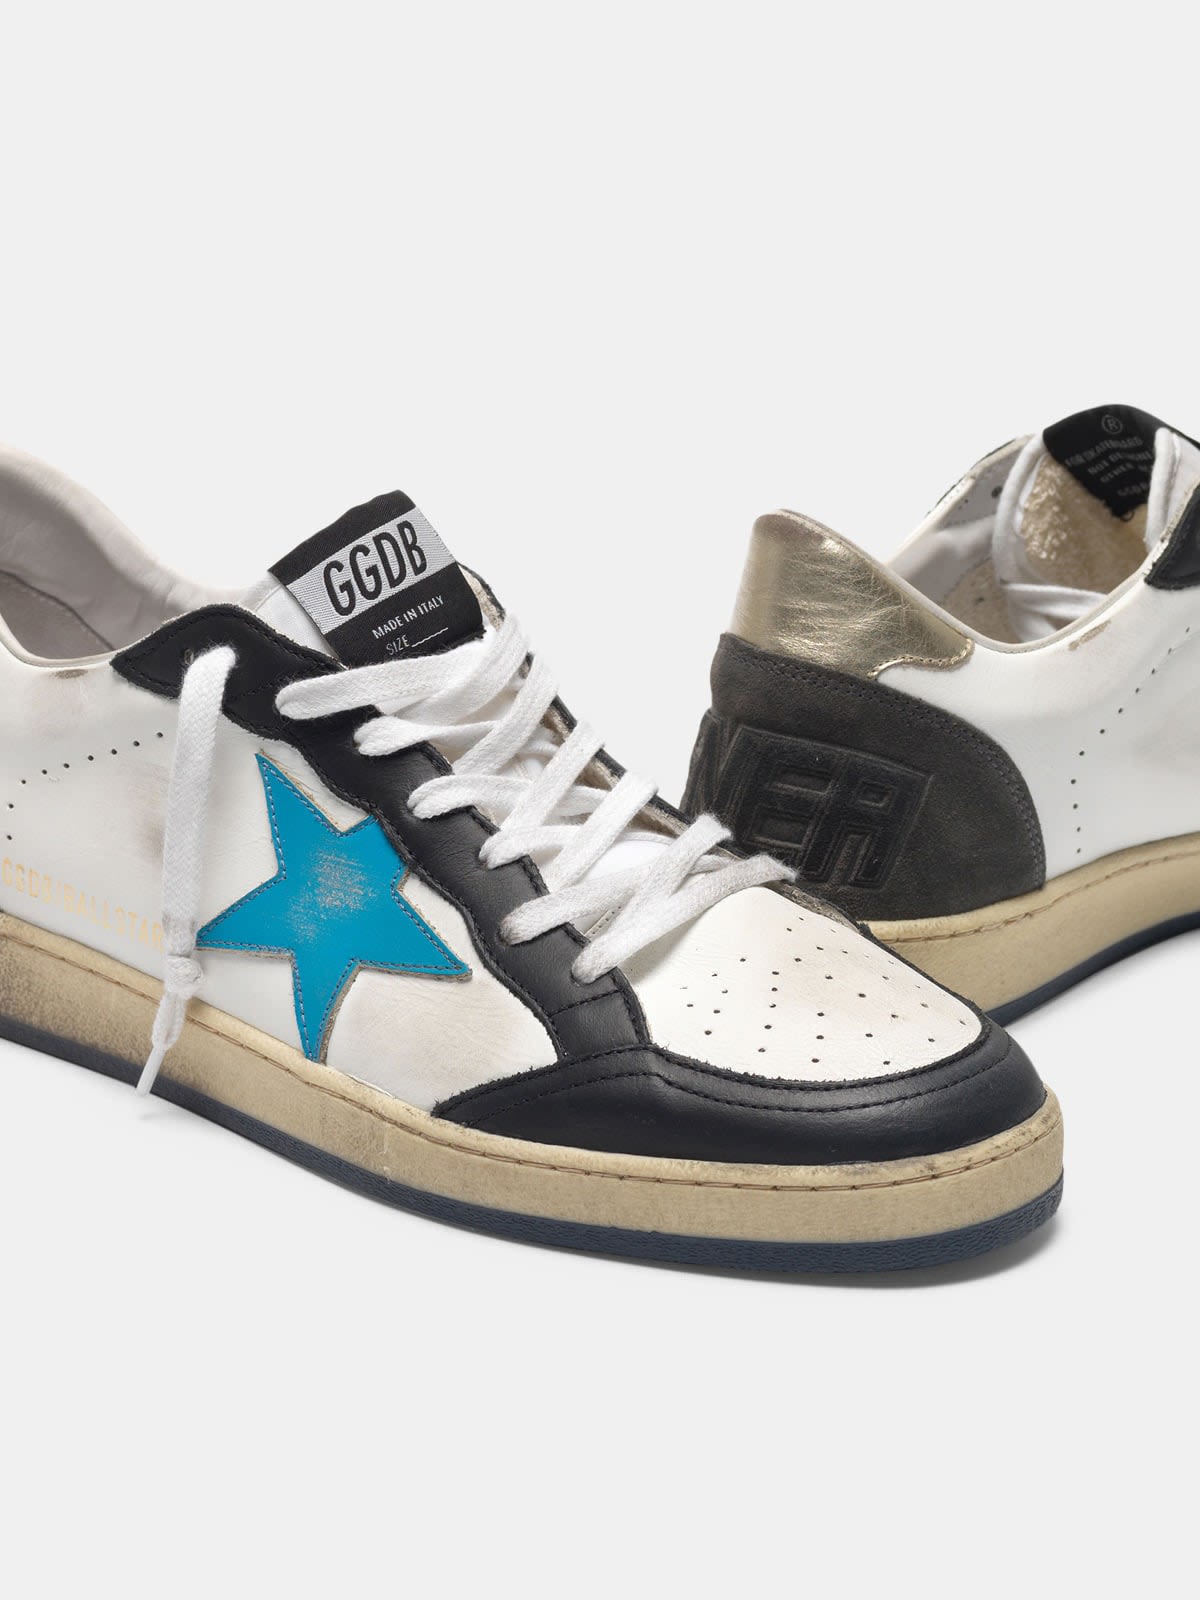 Ball Star sneakers in leather with metallic heel tab